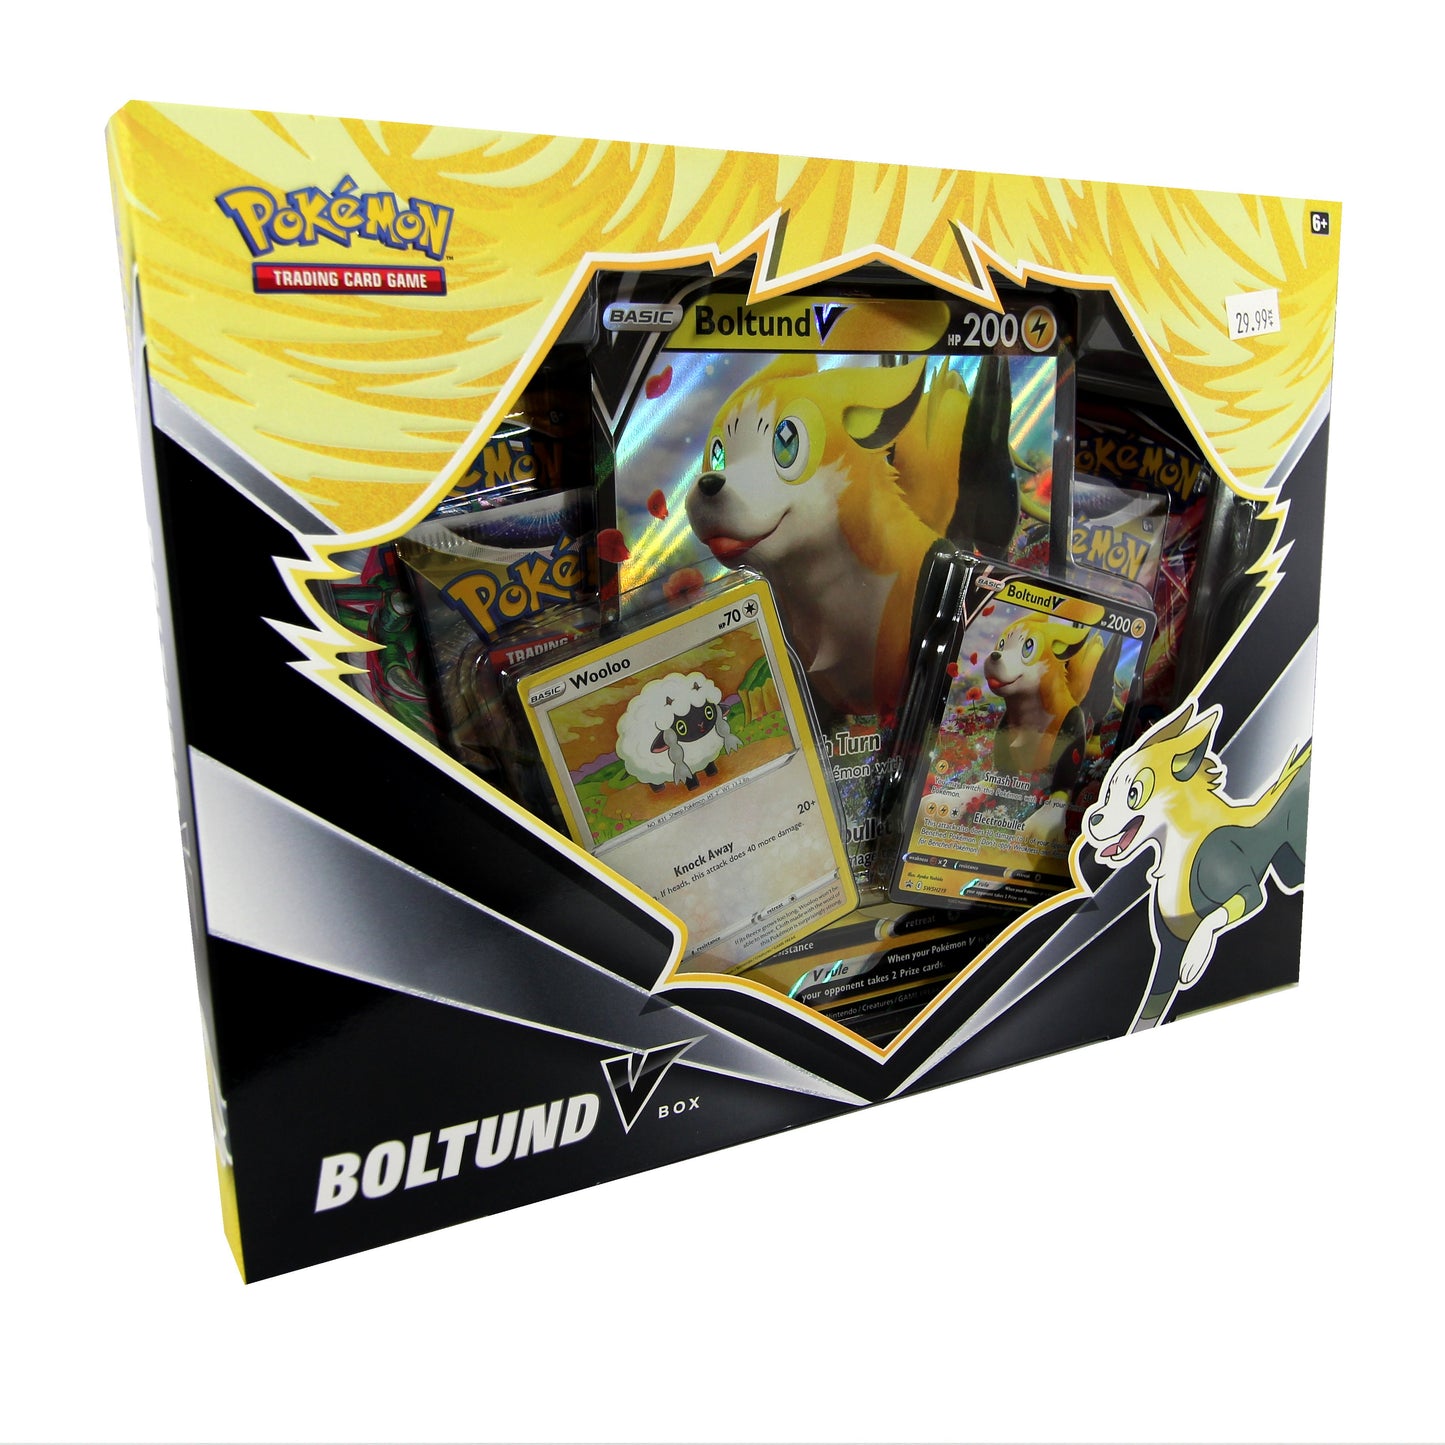 Pokémon Boltund V Box Special Collection Gift Box